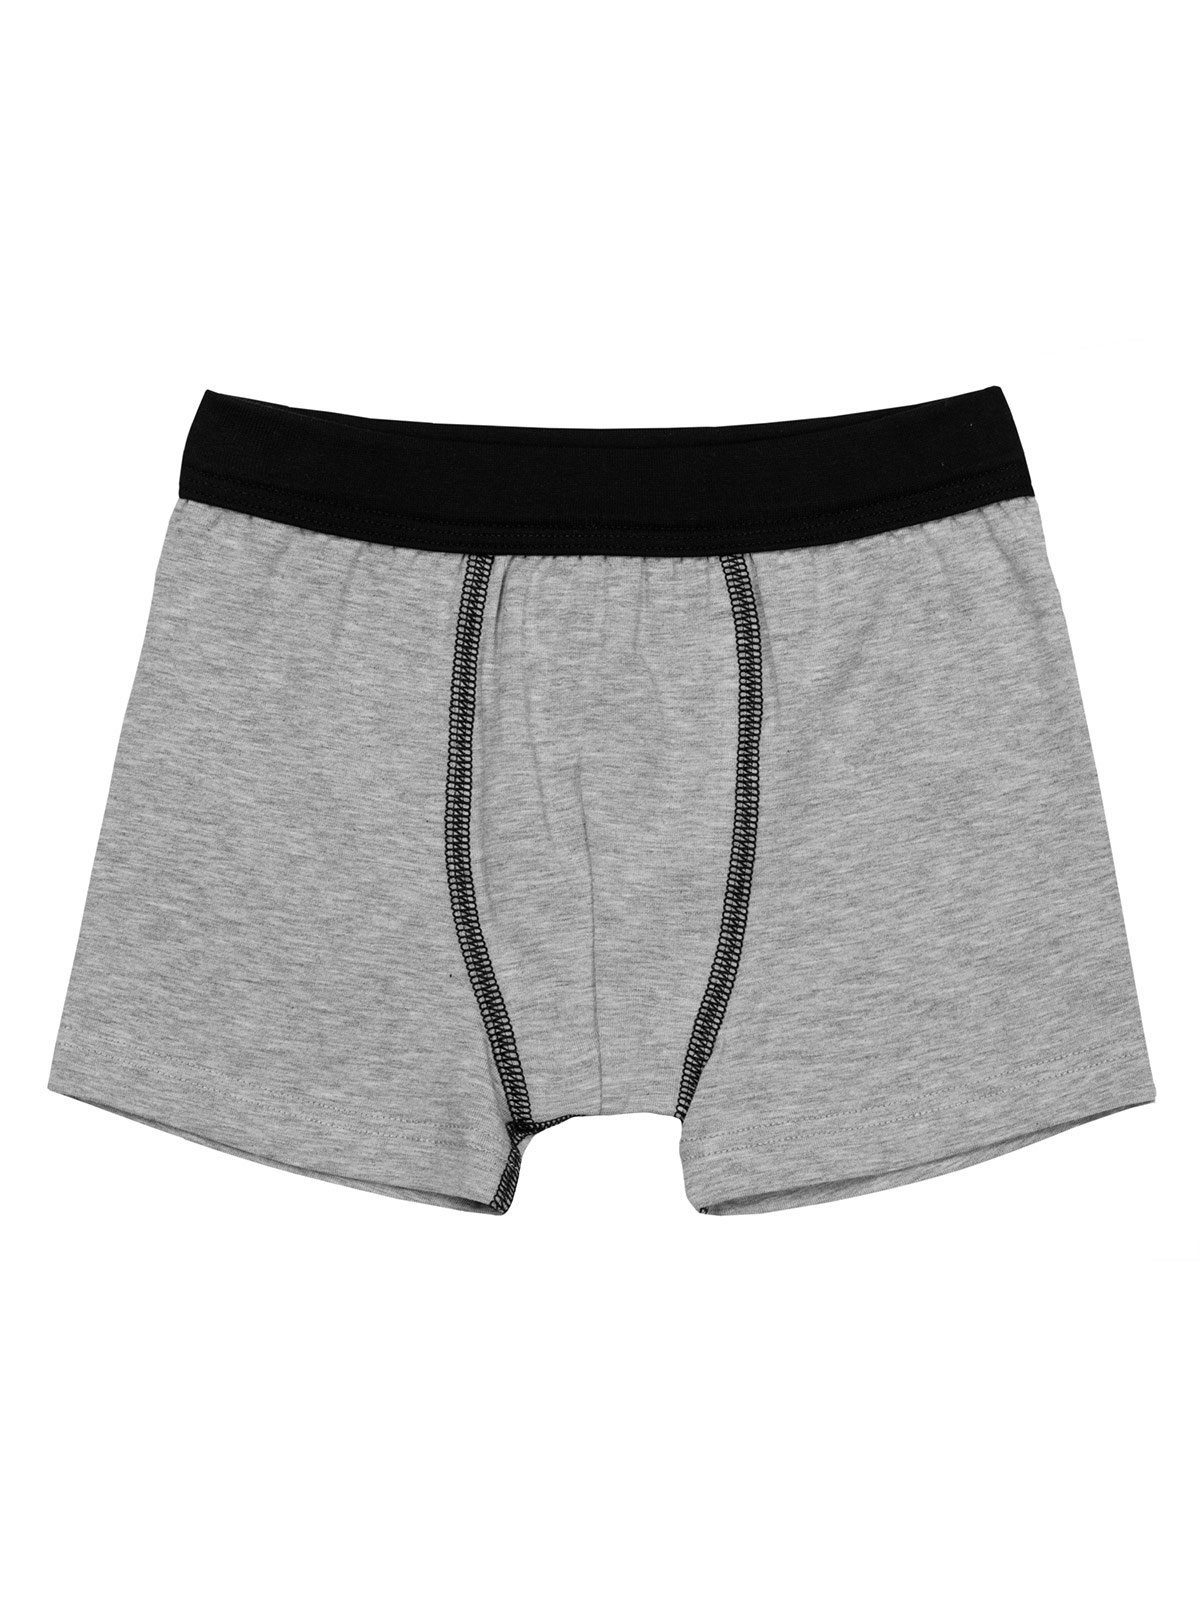 Kids 3er Boxershorts gerader Knaben Jersey Shorts Beinausschnitt multi Sweety Pack for (Packung, Single 3-St) colored